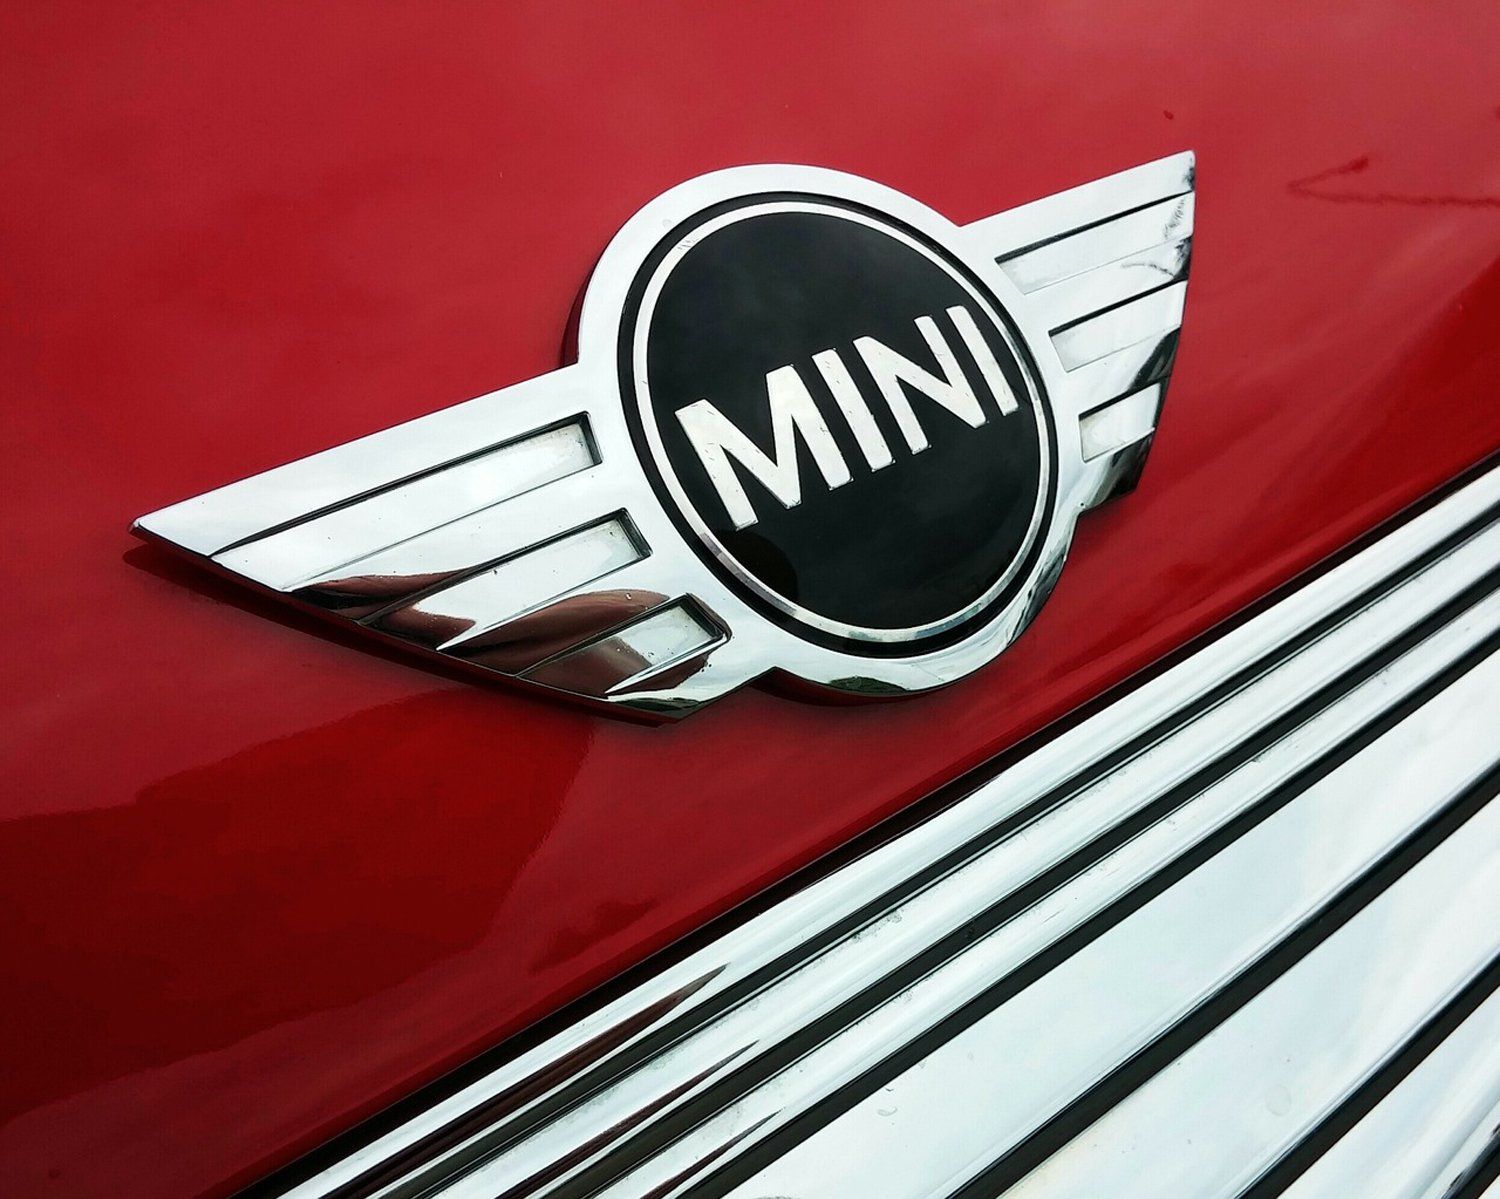 Mini logo